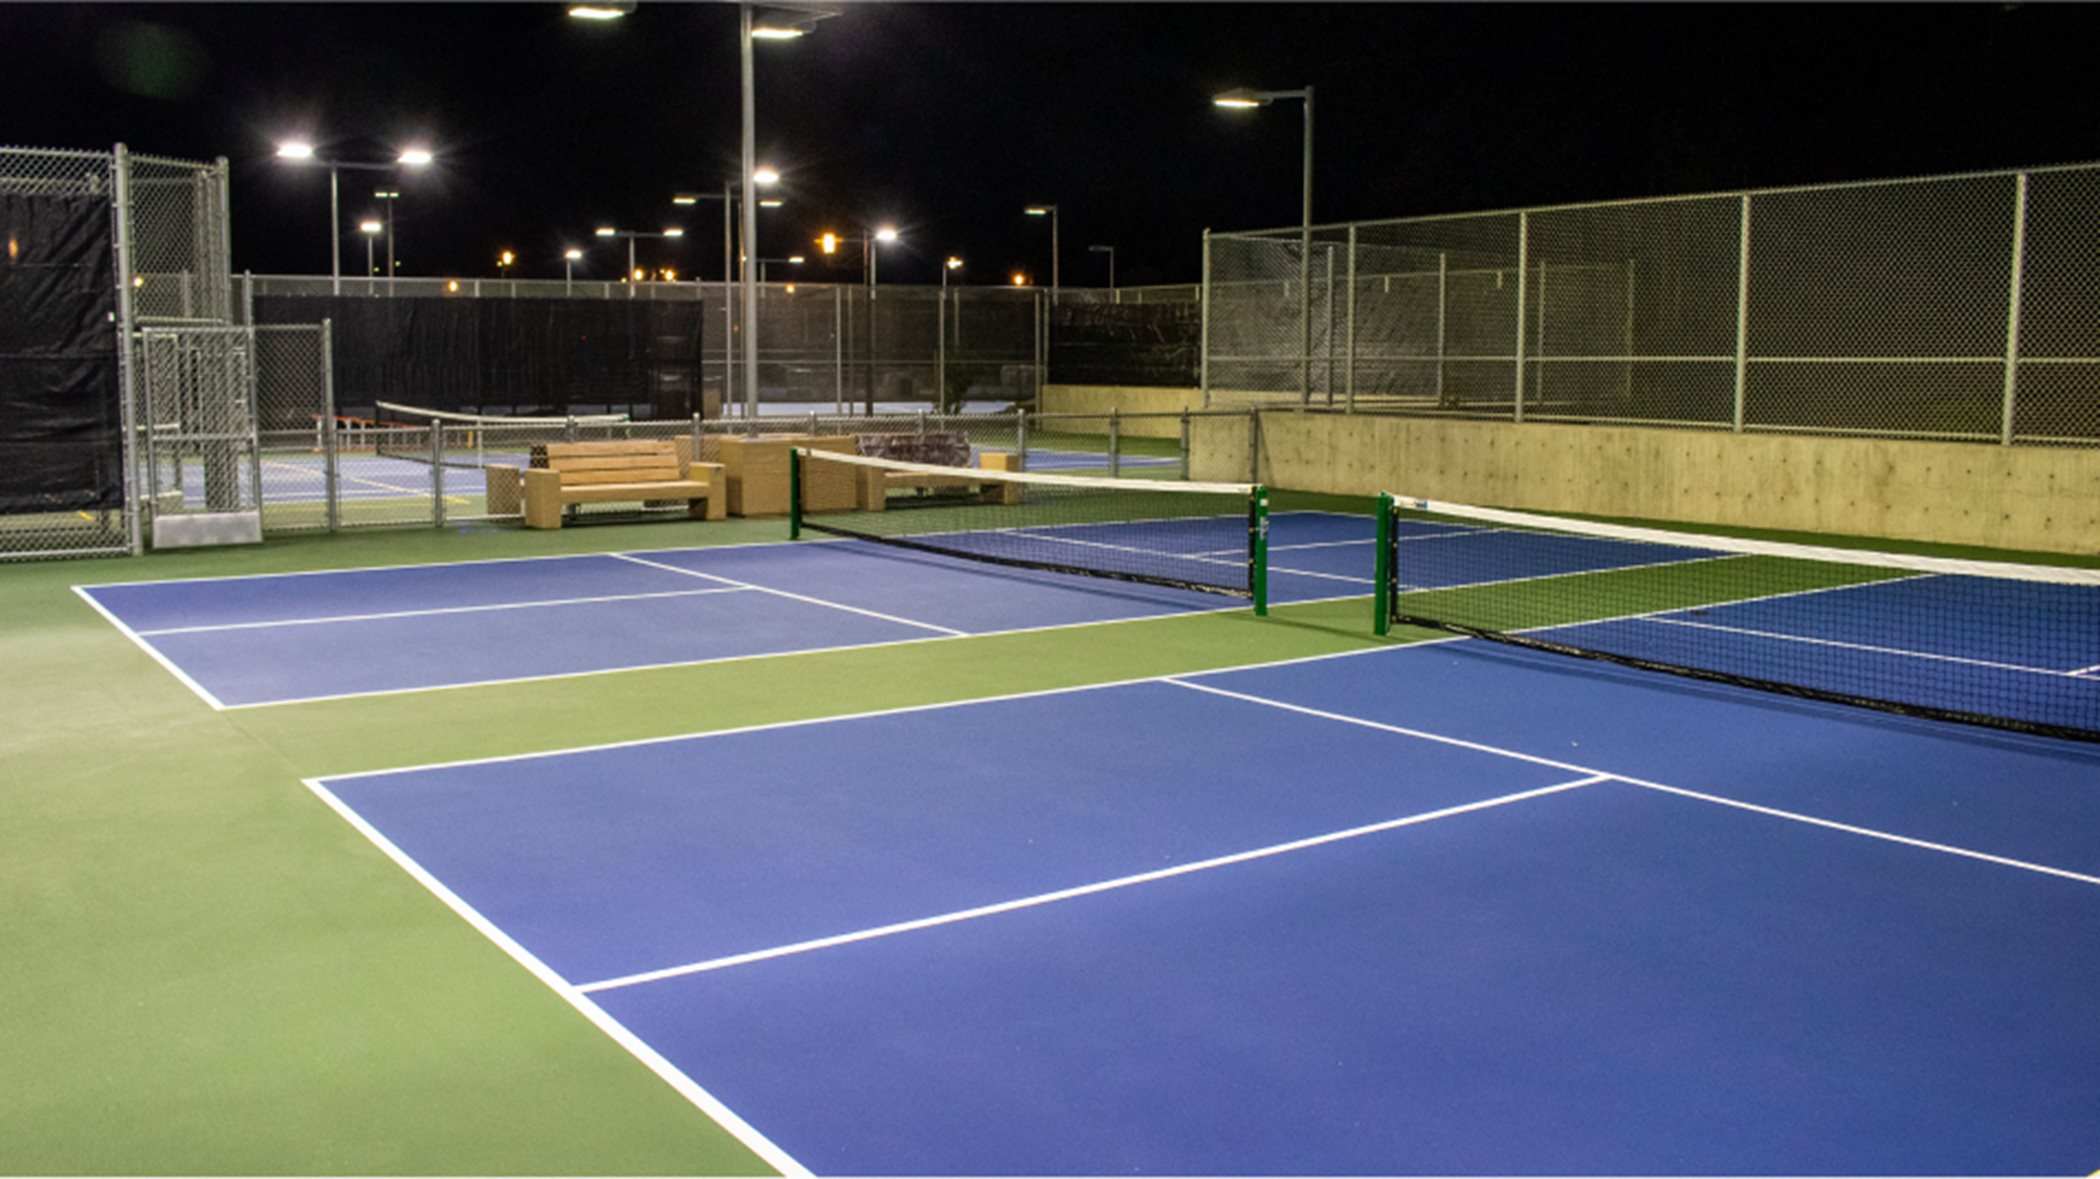 Tennis court at escencia sports park